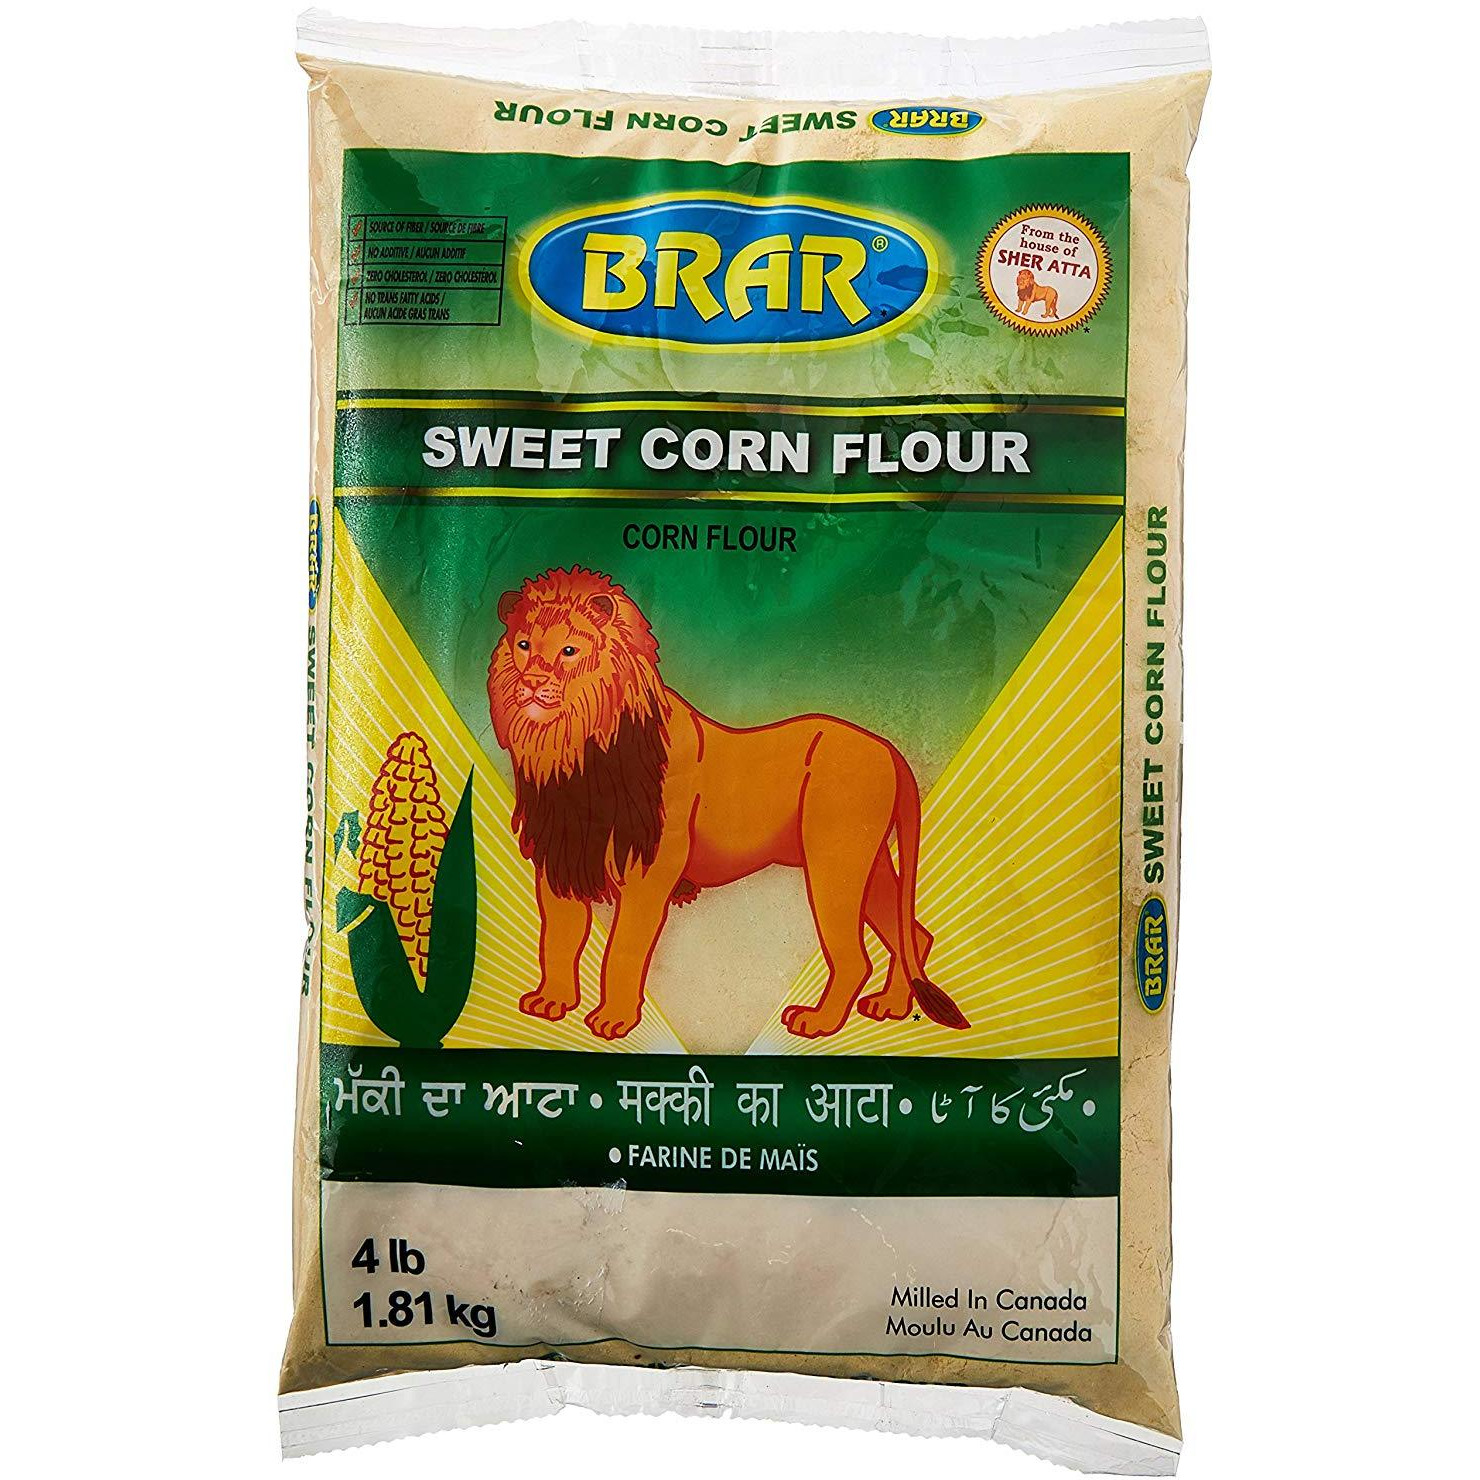 Brar Sweet Corn Flour - 2 Lb (907 Gm)